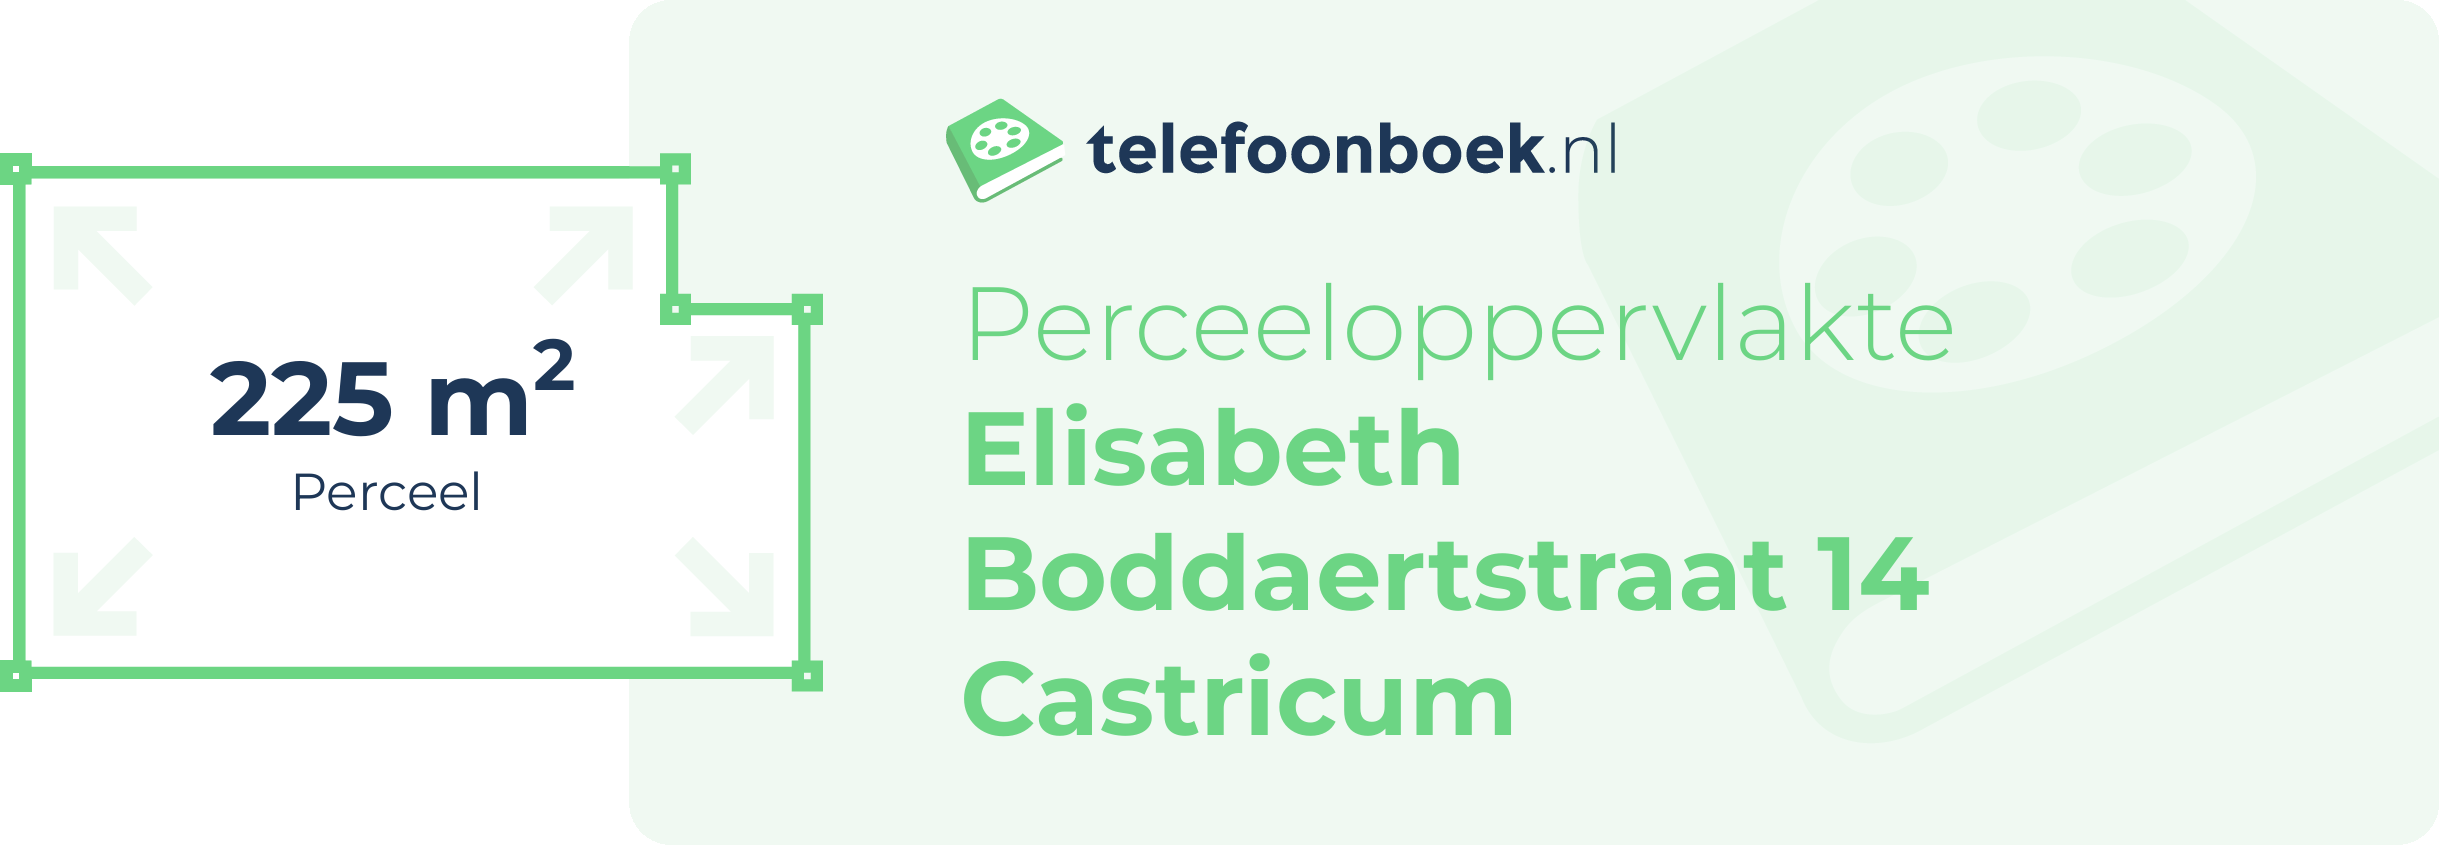 Perceeloppervlakte Elisabeth Boddaertstraat 14 Castricum